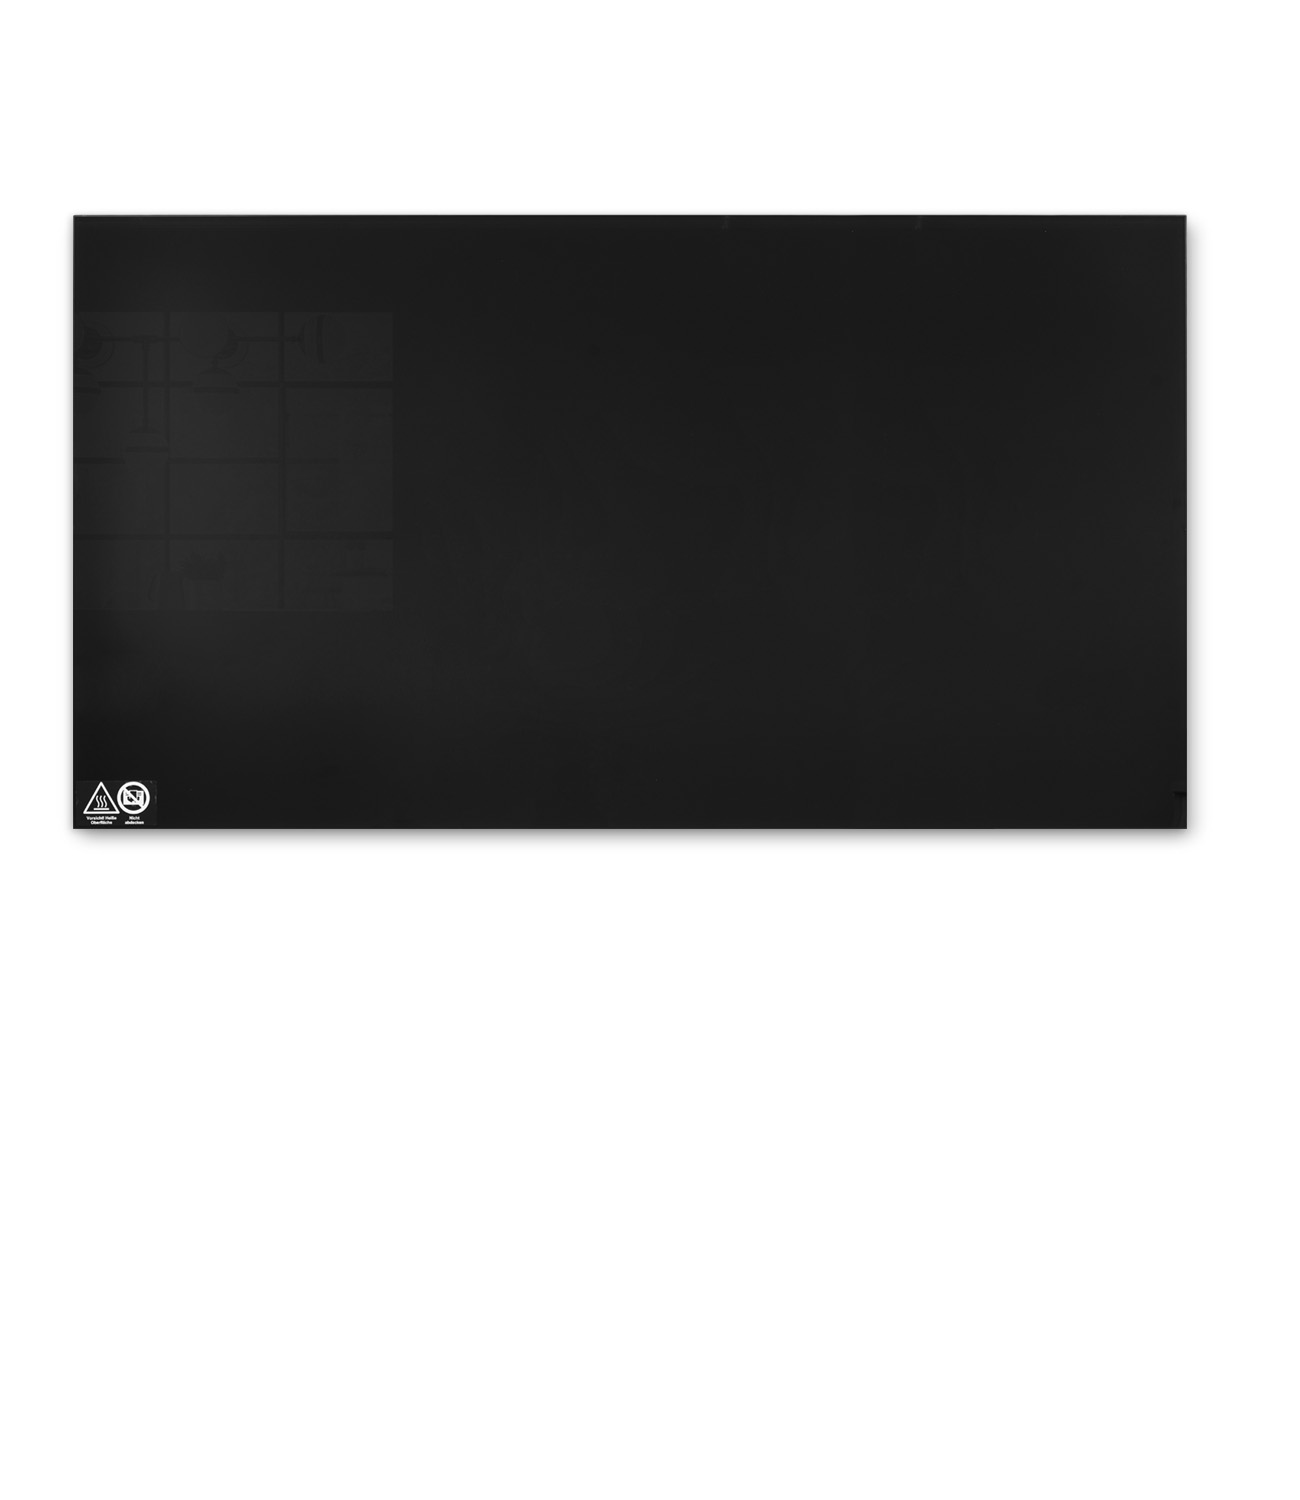 OPRANIC P7 Glazen Infrarood verwarming 450W – 900W in wit of zwart